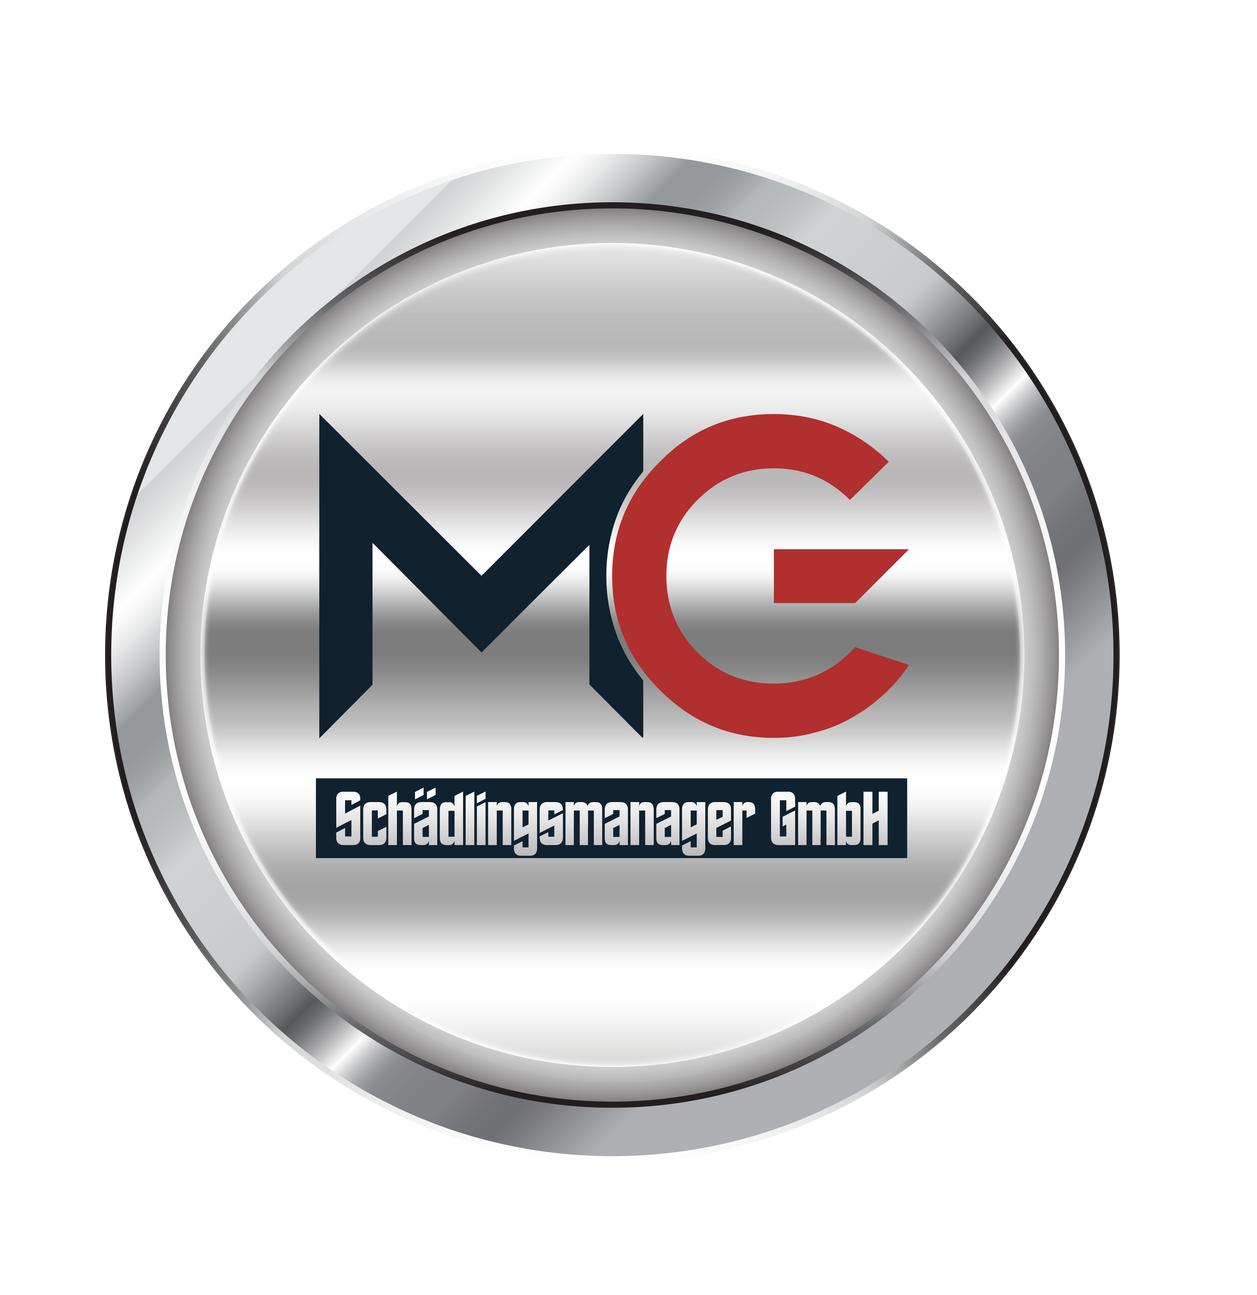 MG Schädlingsmanager GmbH